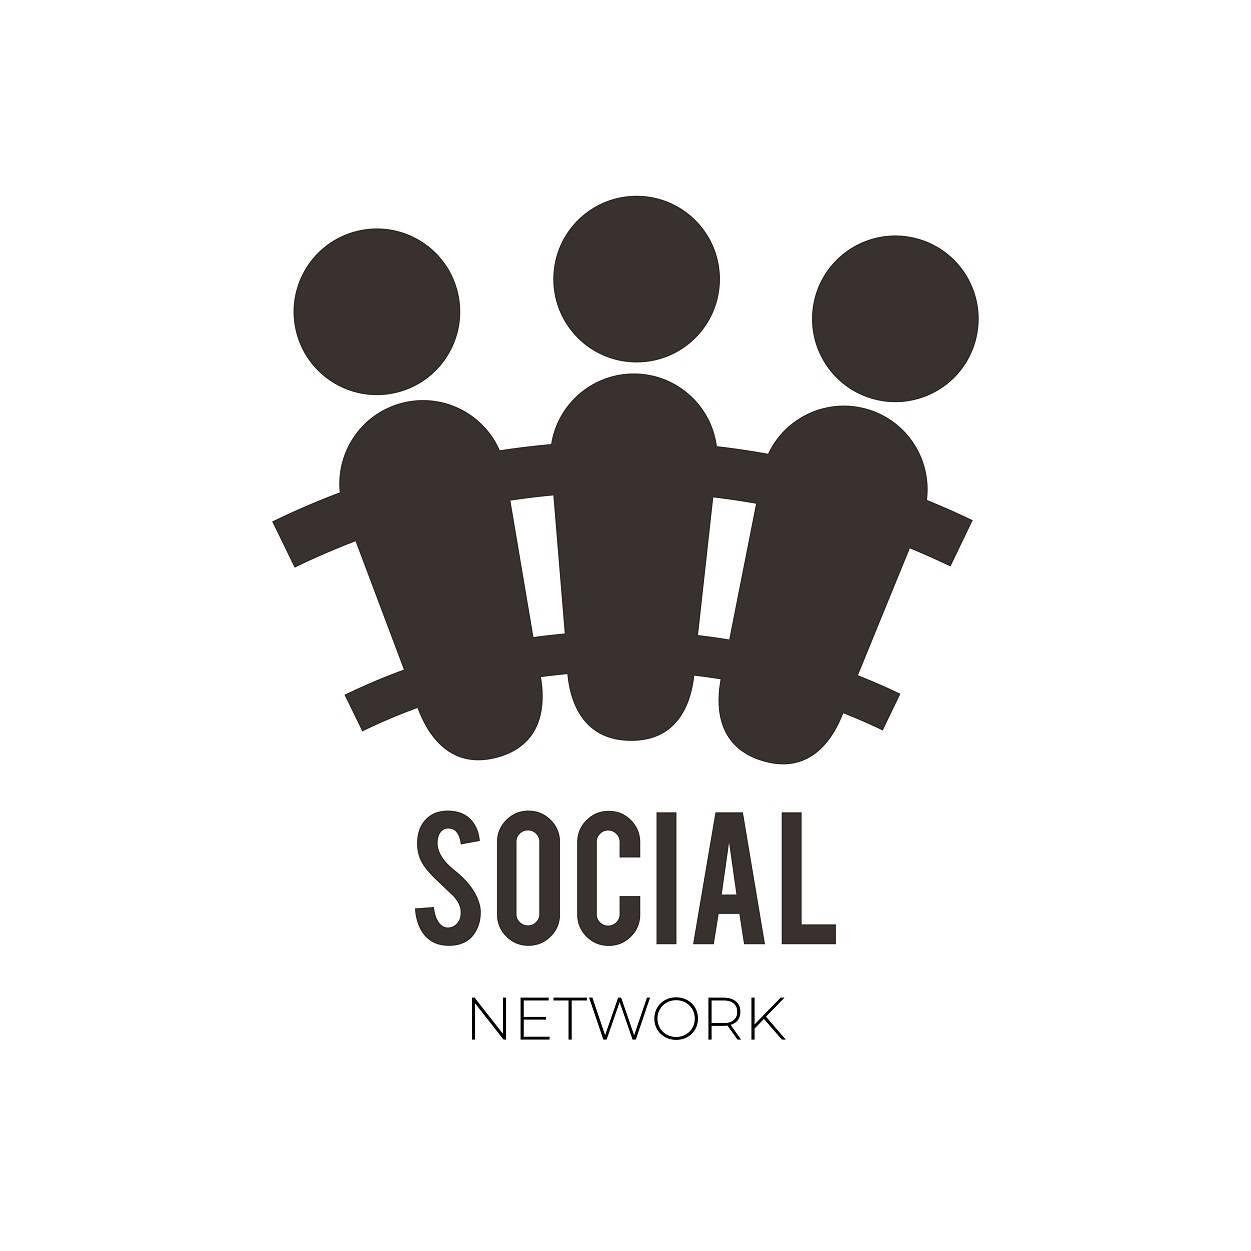 Social network logo design